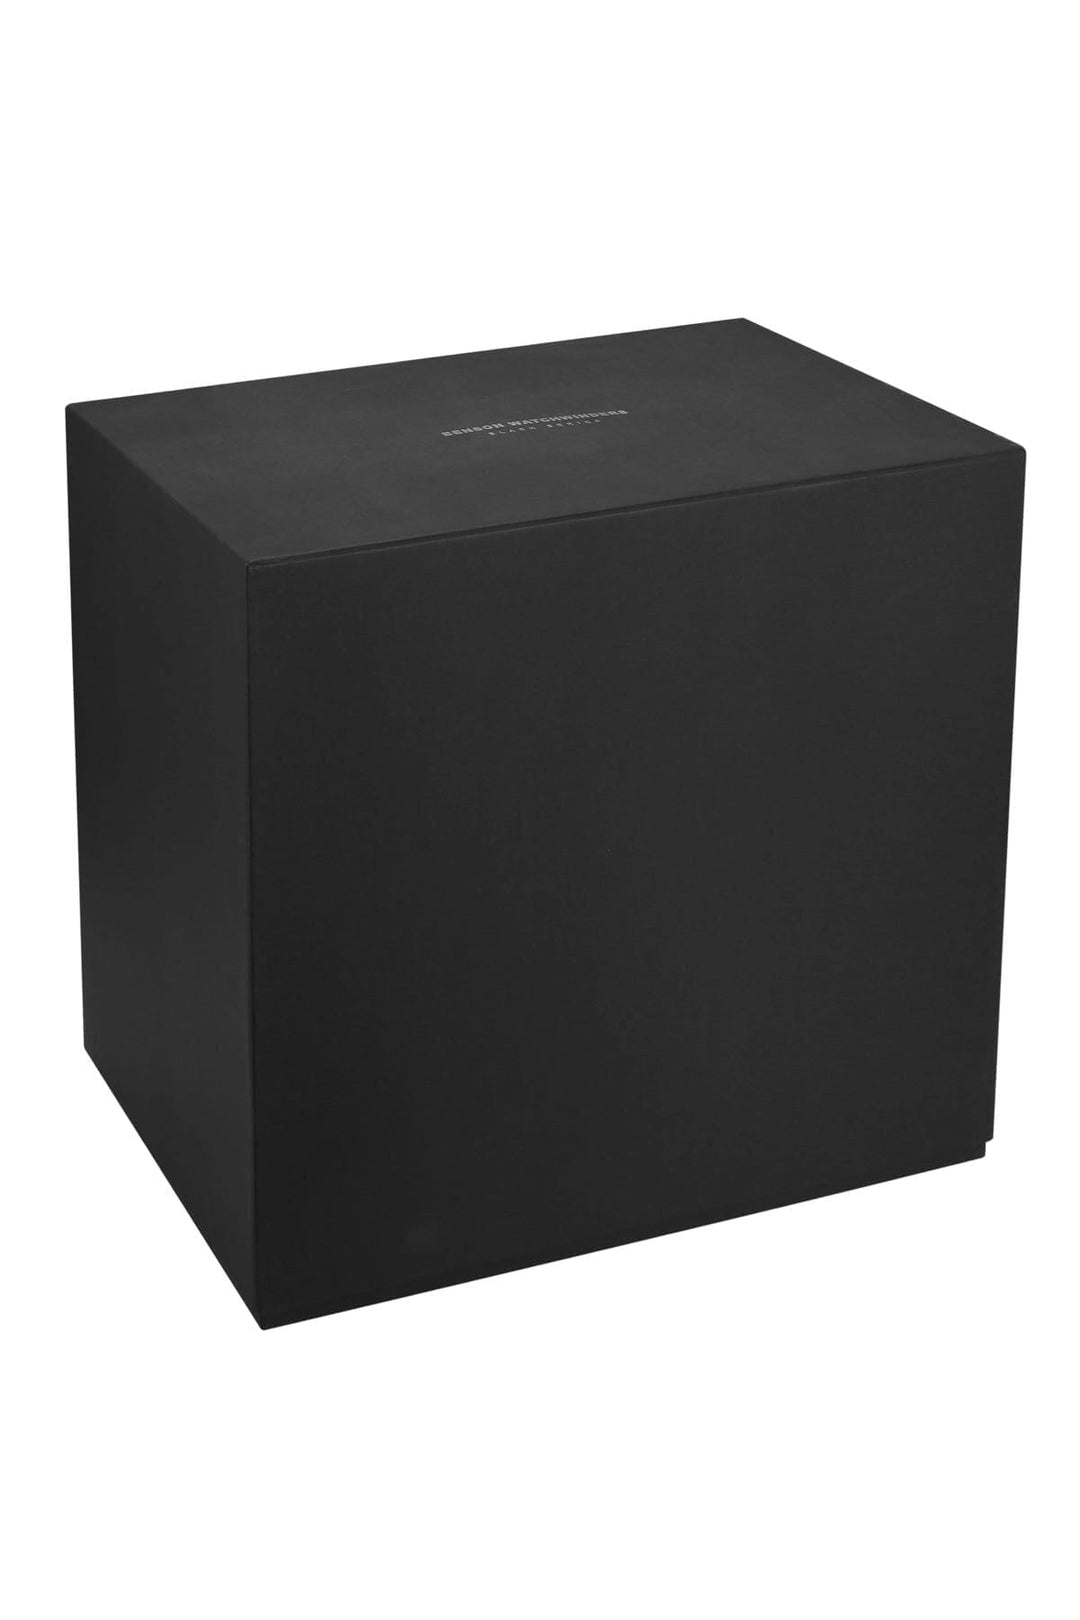 Remontoir Limited Edition Black Series 2.16.WL Benson